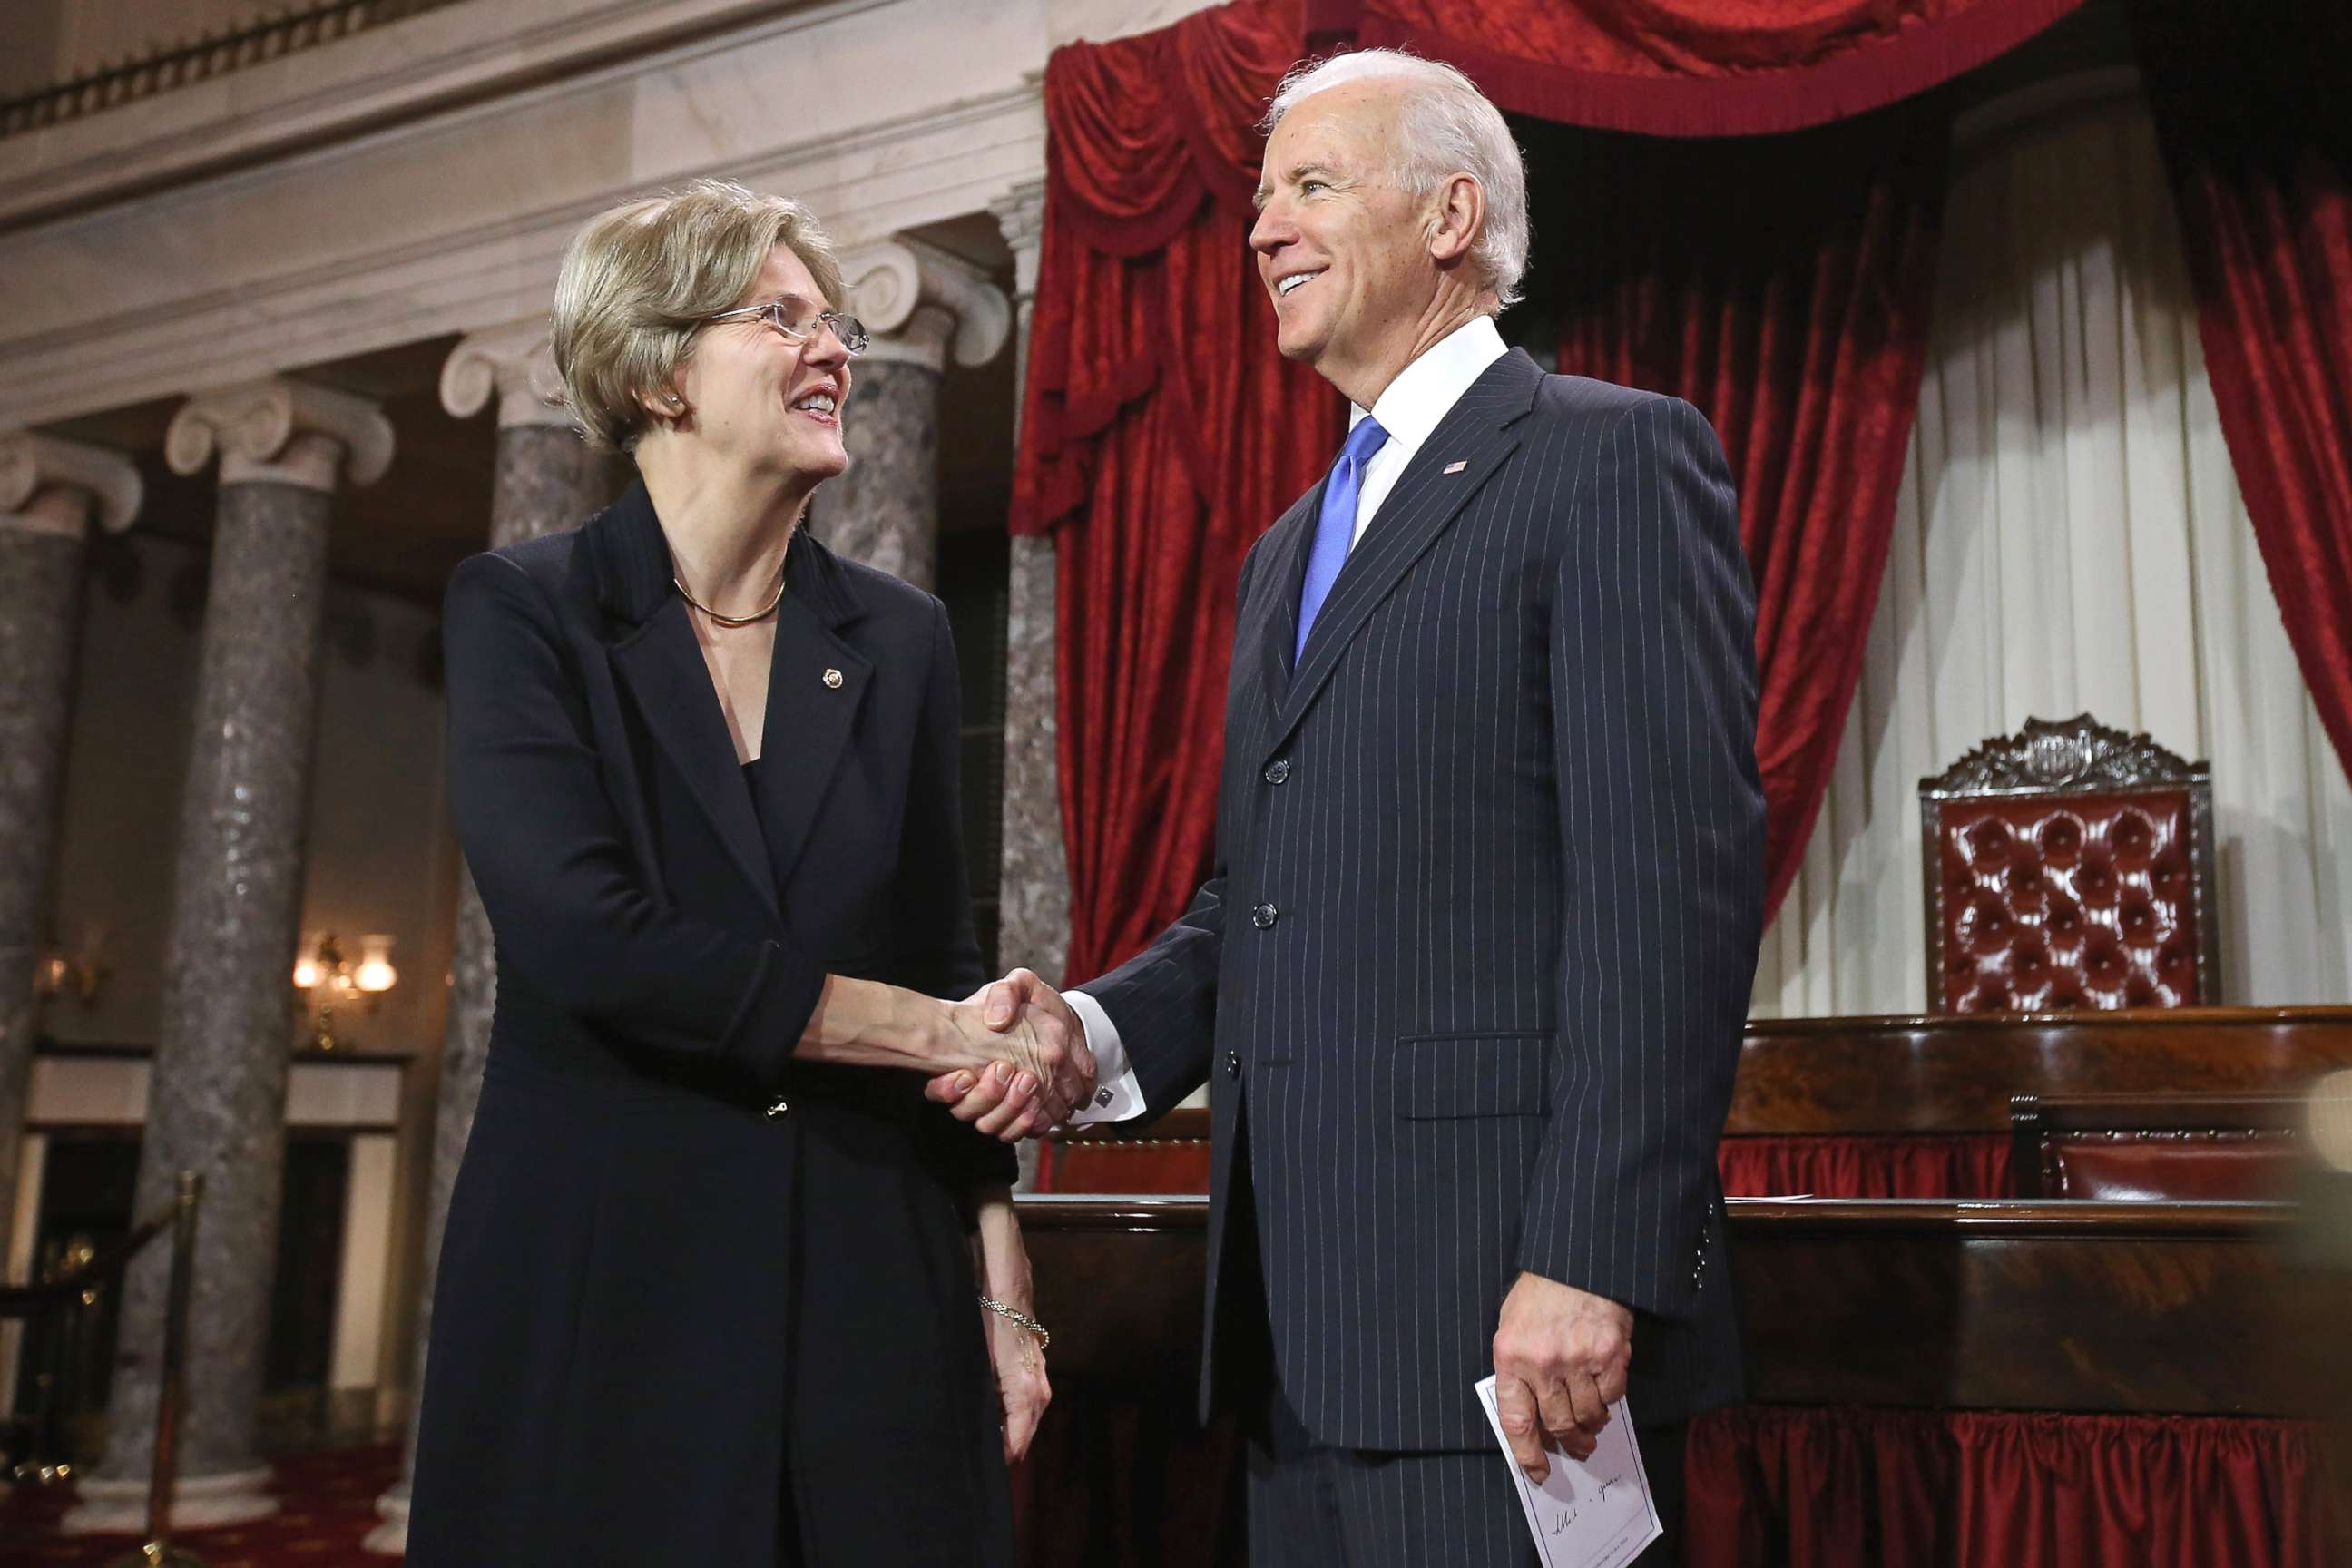 PHOTO: Sen. Elizabeth Warren participates in a reenacted swearing-in with Vice President Joe Biden in the Old Senate Chamber at the U.S. Capitol, Jan. 3, 2013, in Washington, DC.